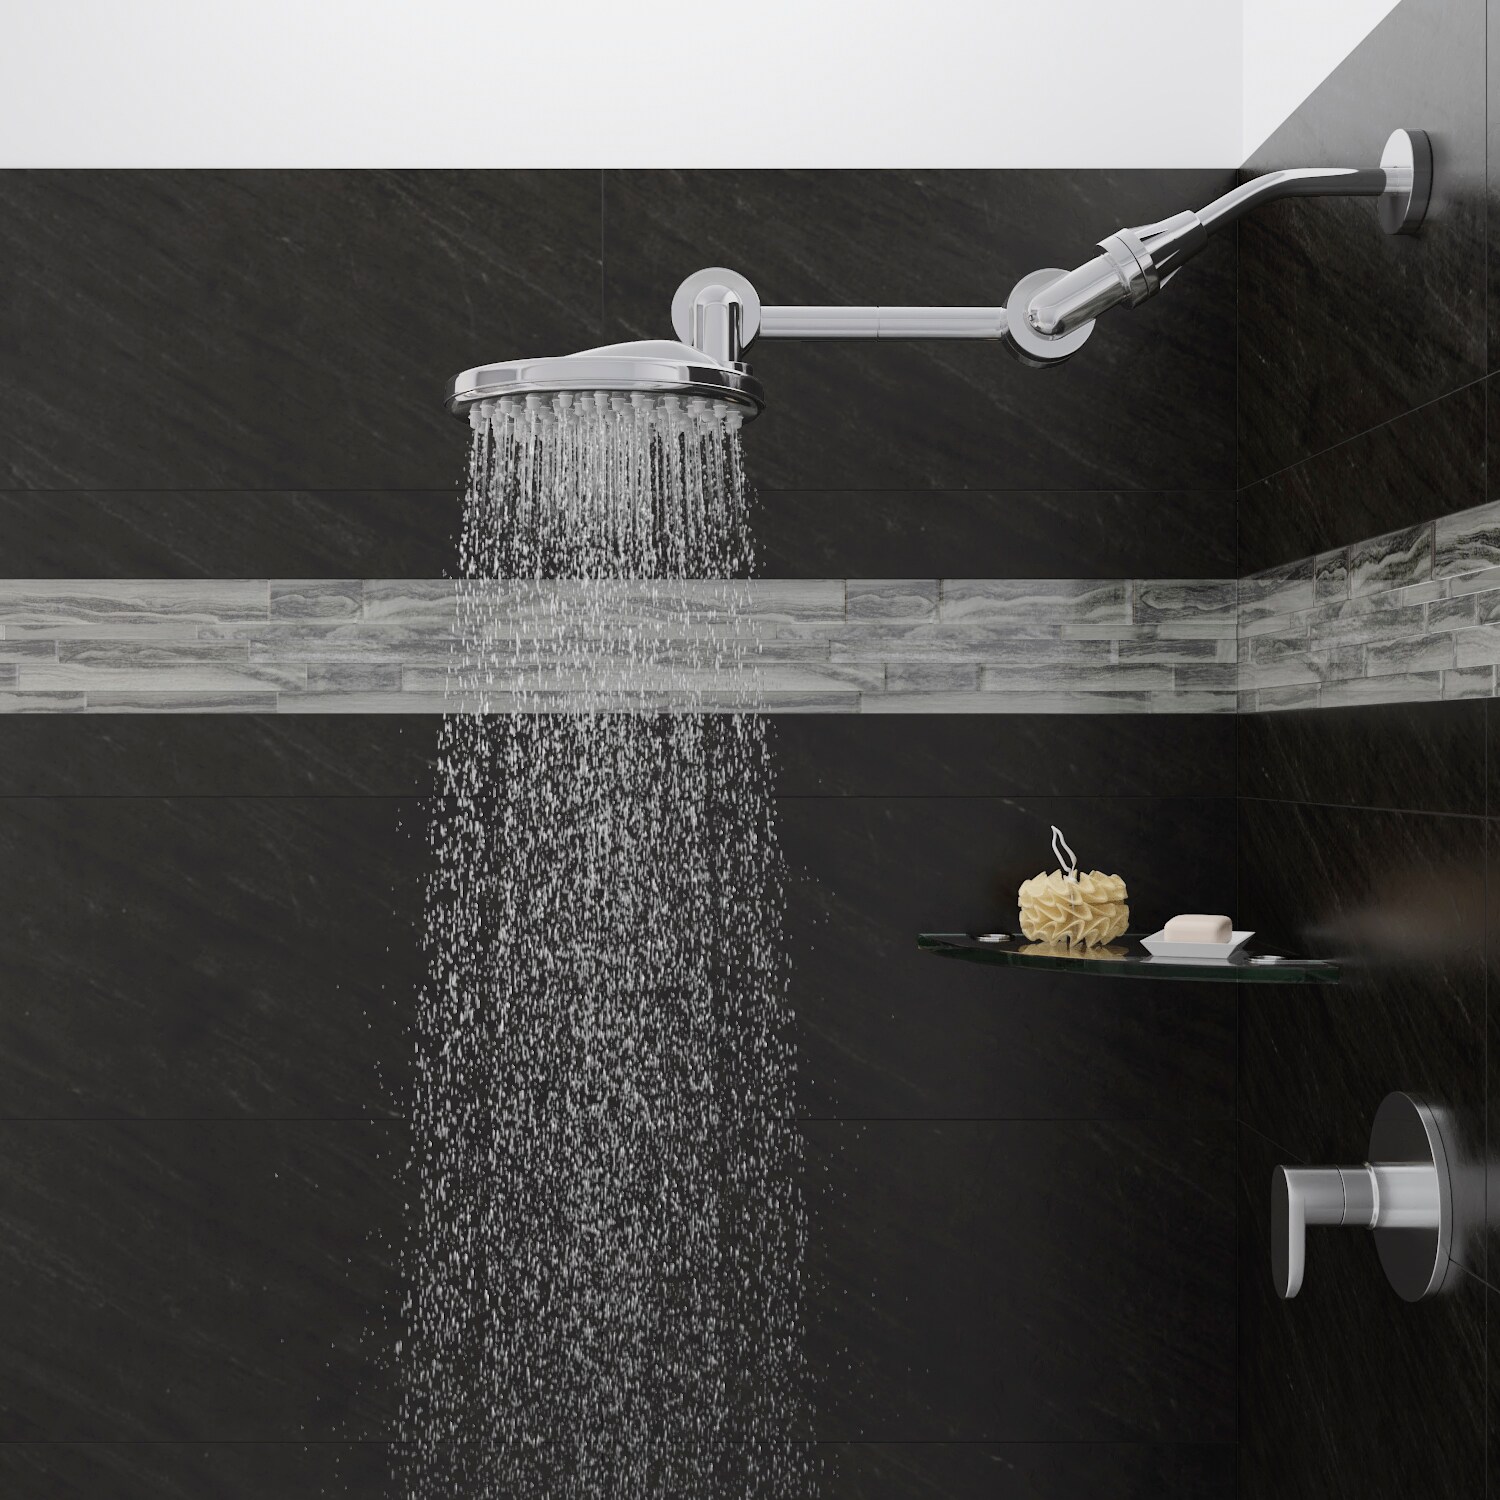 Details about   High Pressure Bathroom Spray Sprinkler Water Saving Handheld Shower Head Chrome 